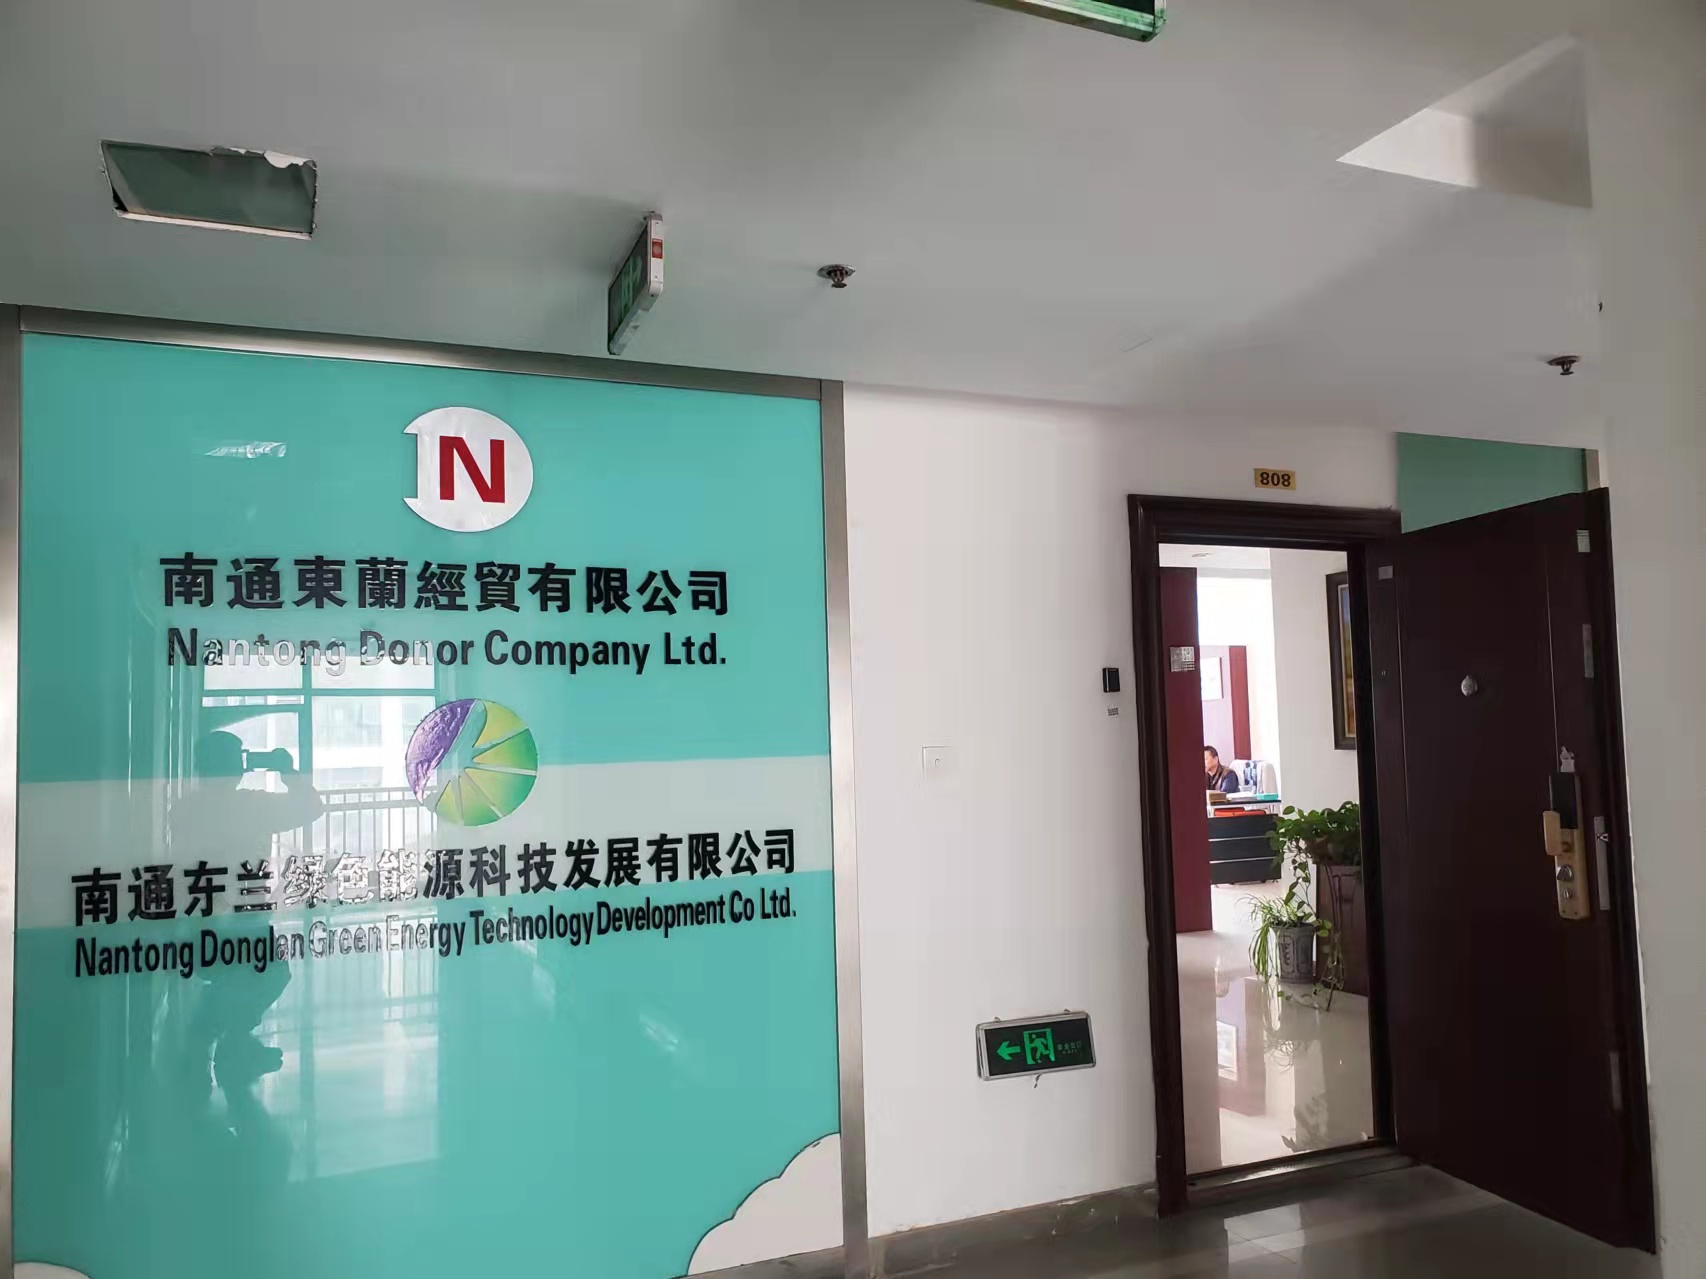 Nantong Donor Company Ltd